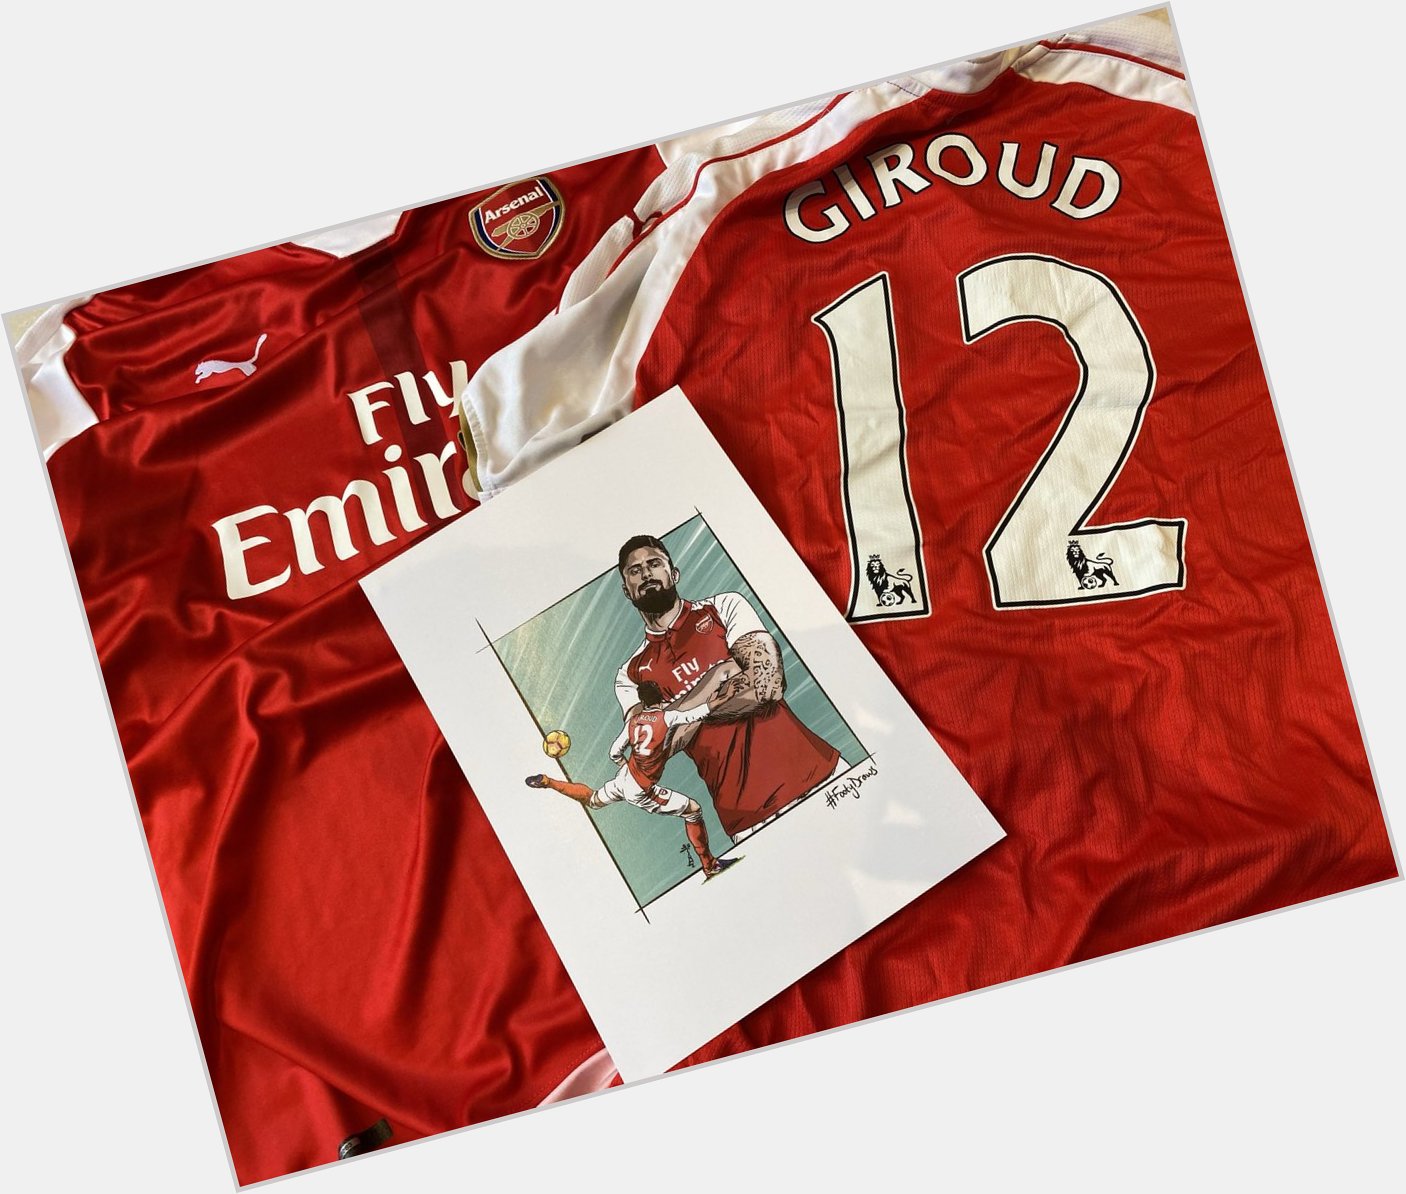 Happy Birthday to Olivier Giroud!
The 